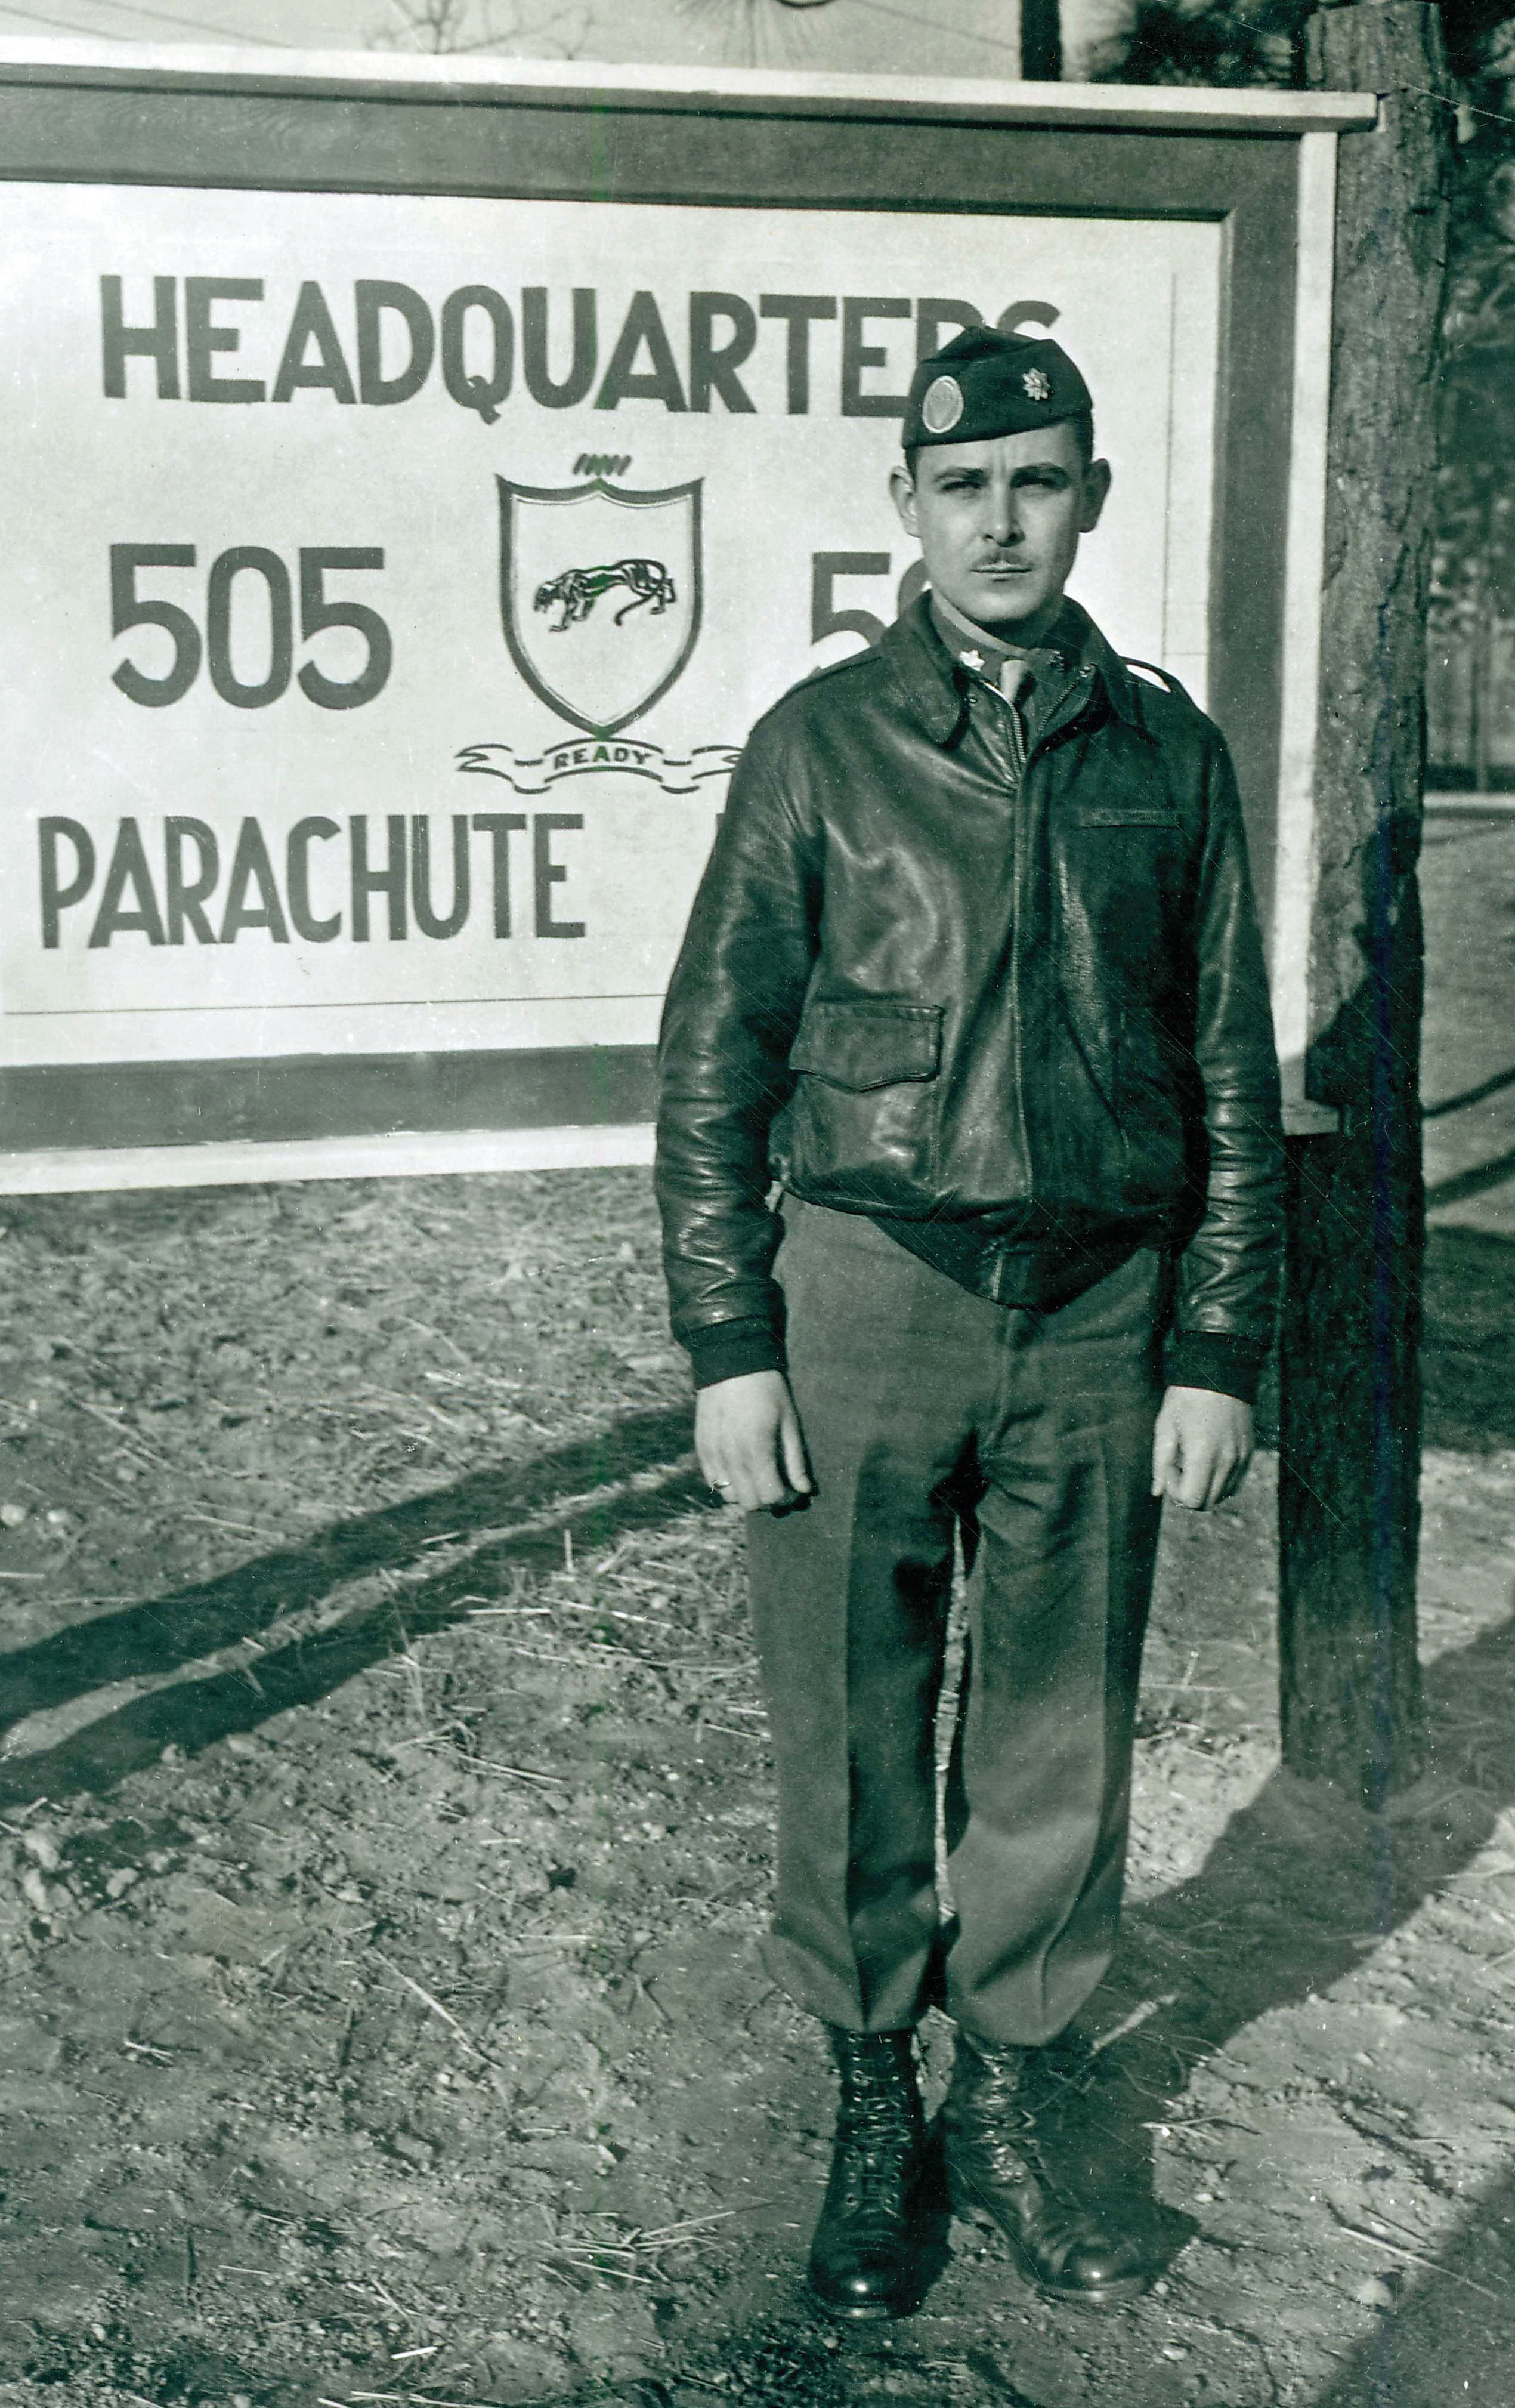 Lt. Col. Herbert Batcheller- HHC - KIA Normandy June 7th 1944